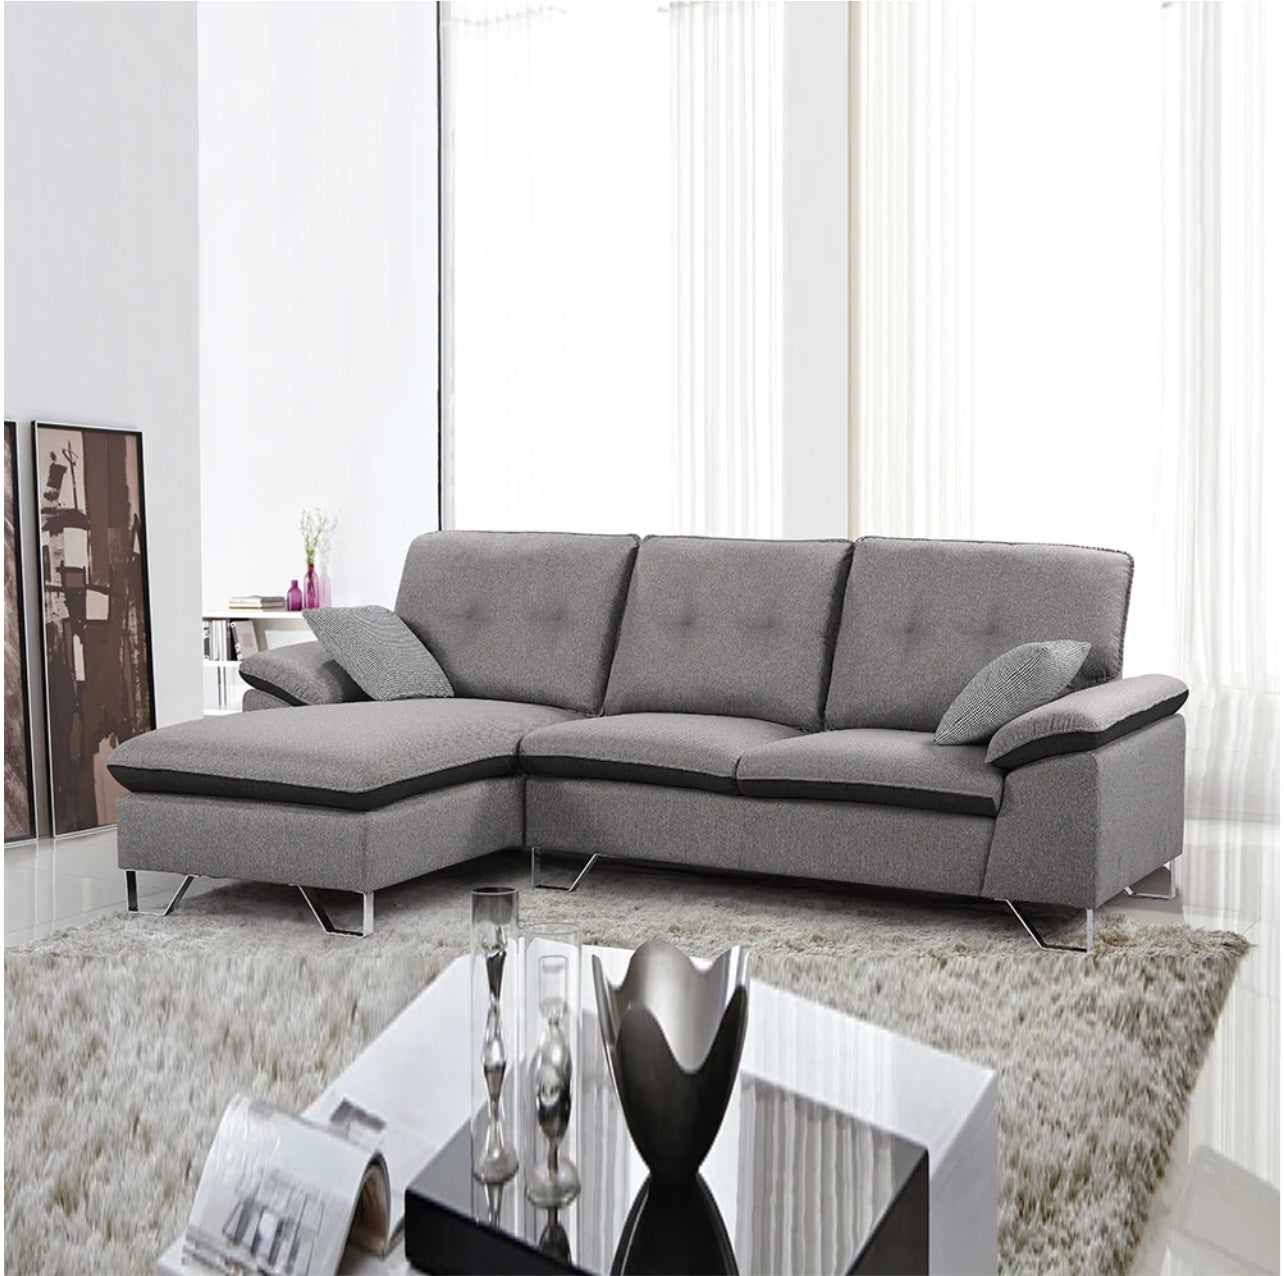 Designer Sofa Set- European Style Modern Sectional Luxury Furniture Sofa Set (Grey and Black)